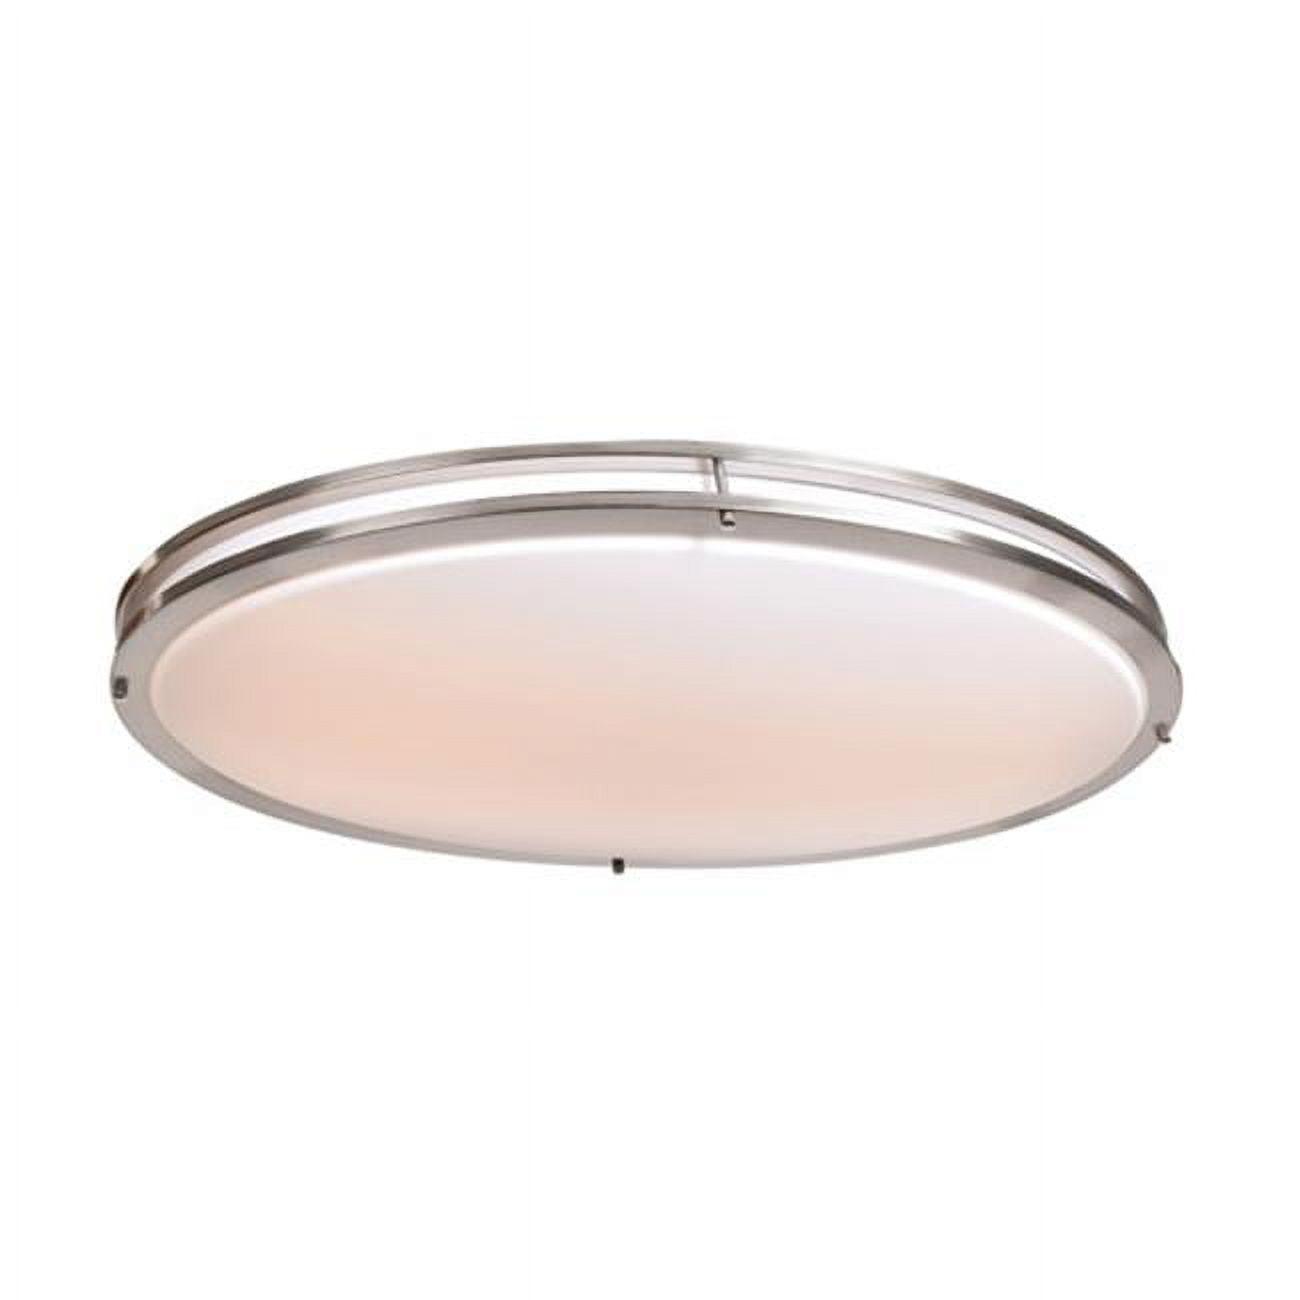 Picture of Access Lighting 20468LEDD-BRZ-ACR 33 in . Solero Oval LED Bronze Flush Mount Ceiling Light